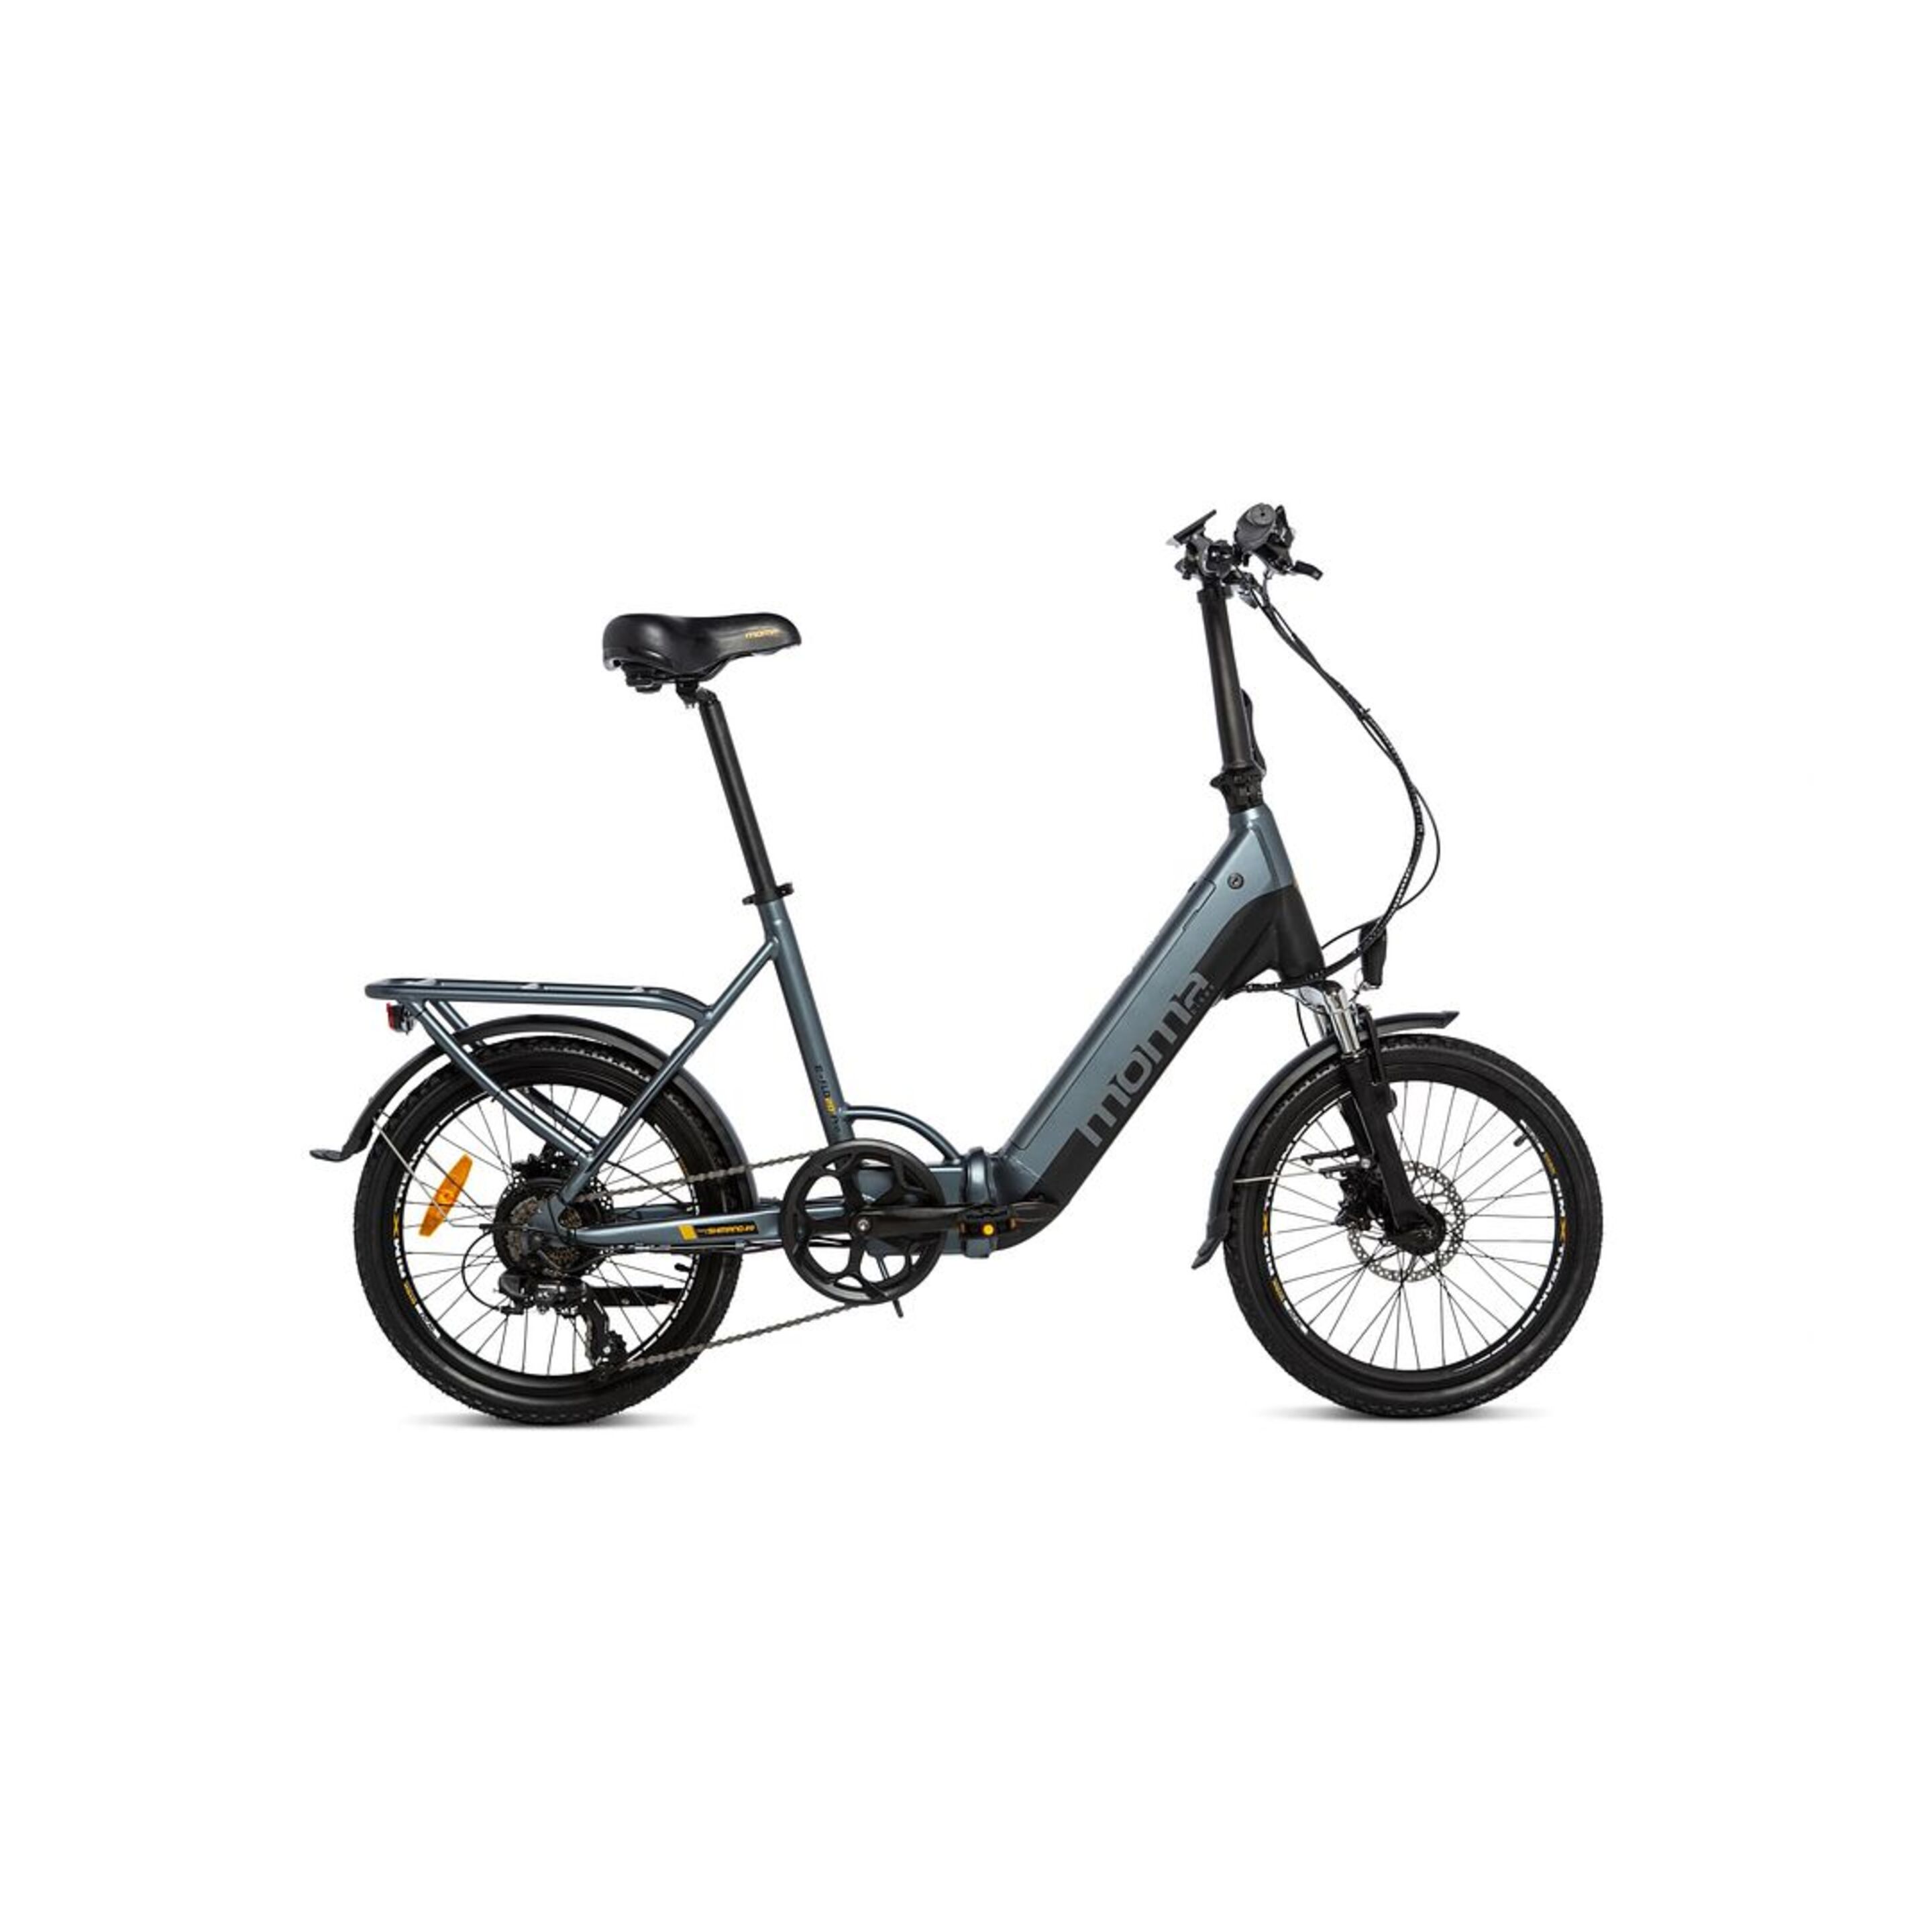 Bicicleta Electrica Moma Bikes E-bike 20pro - gris-negro - 